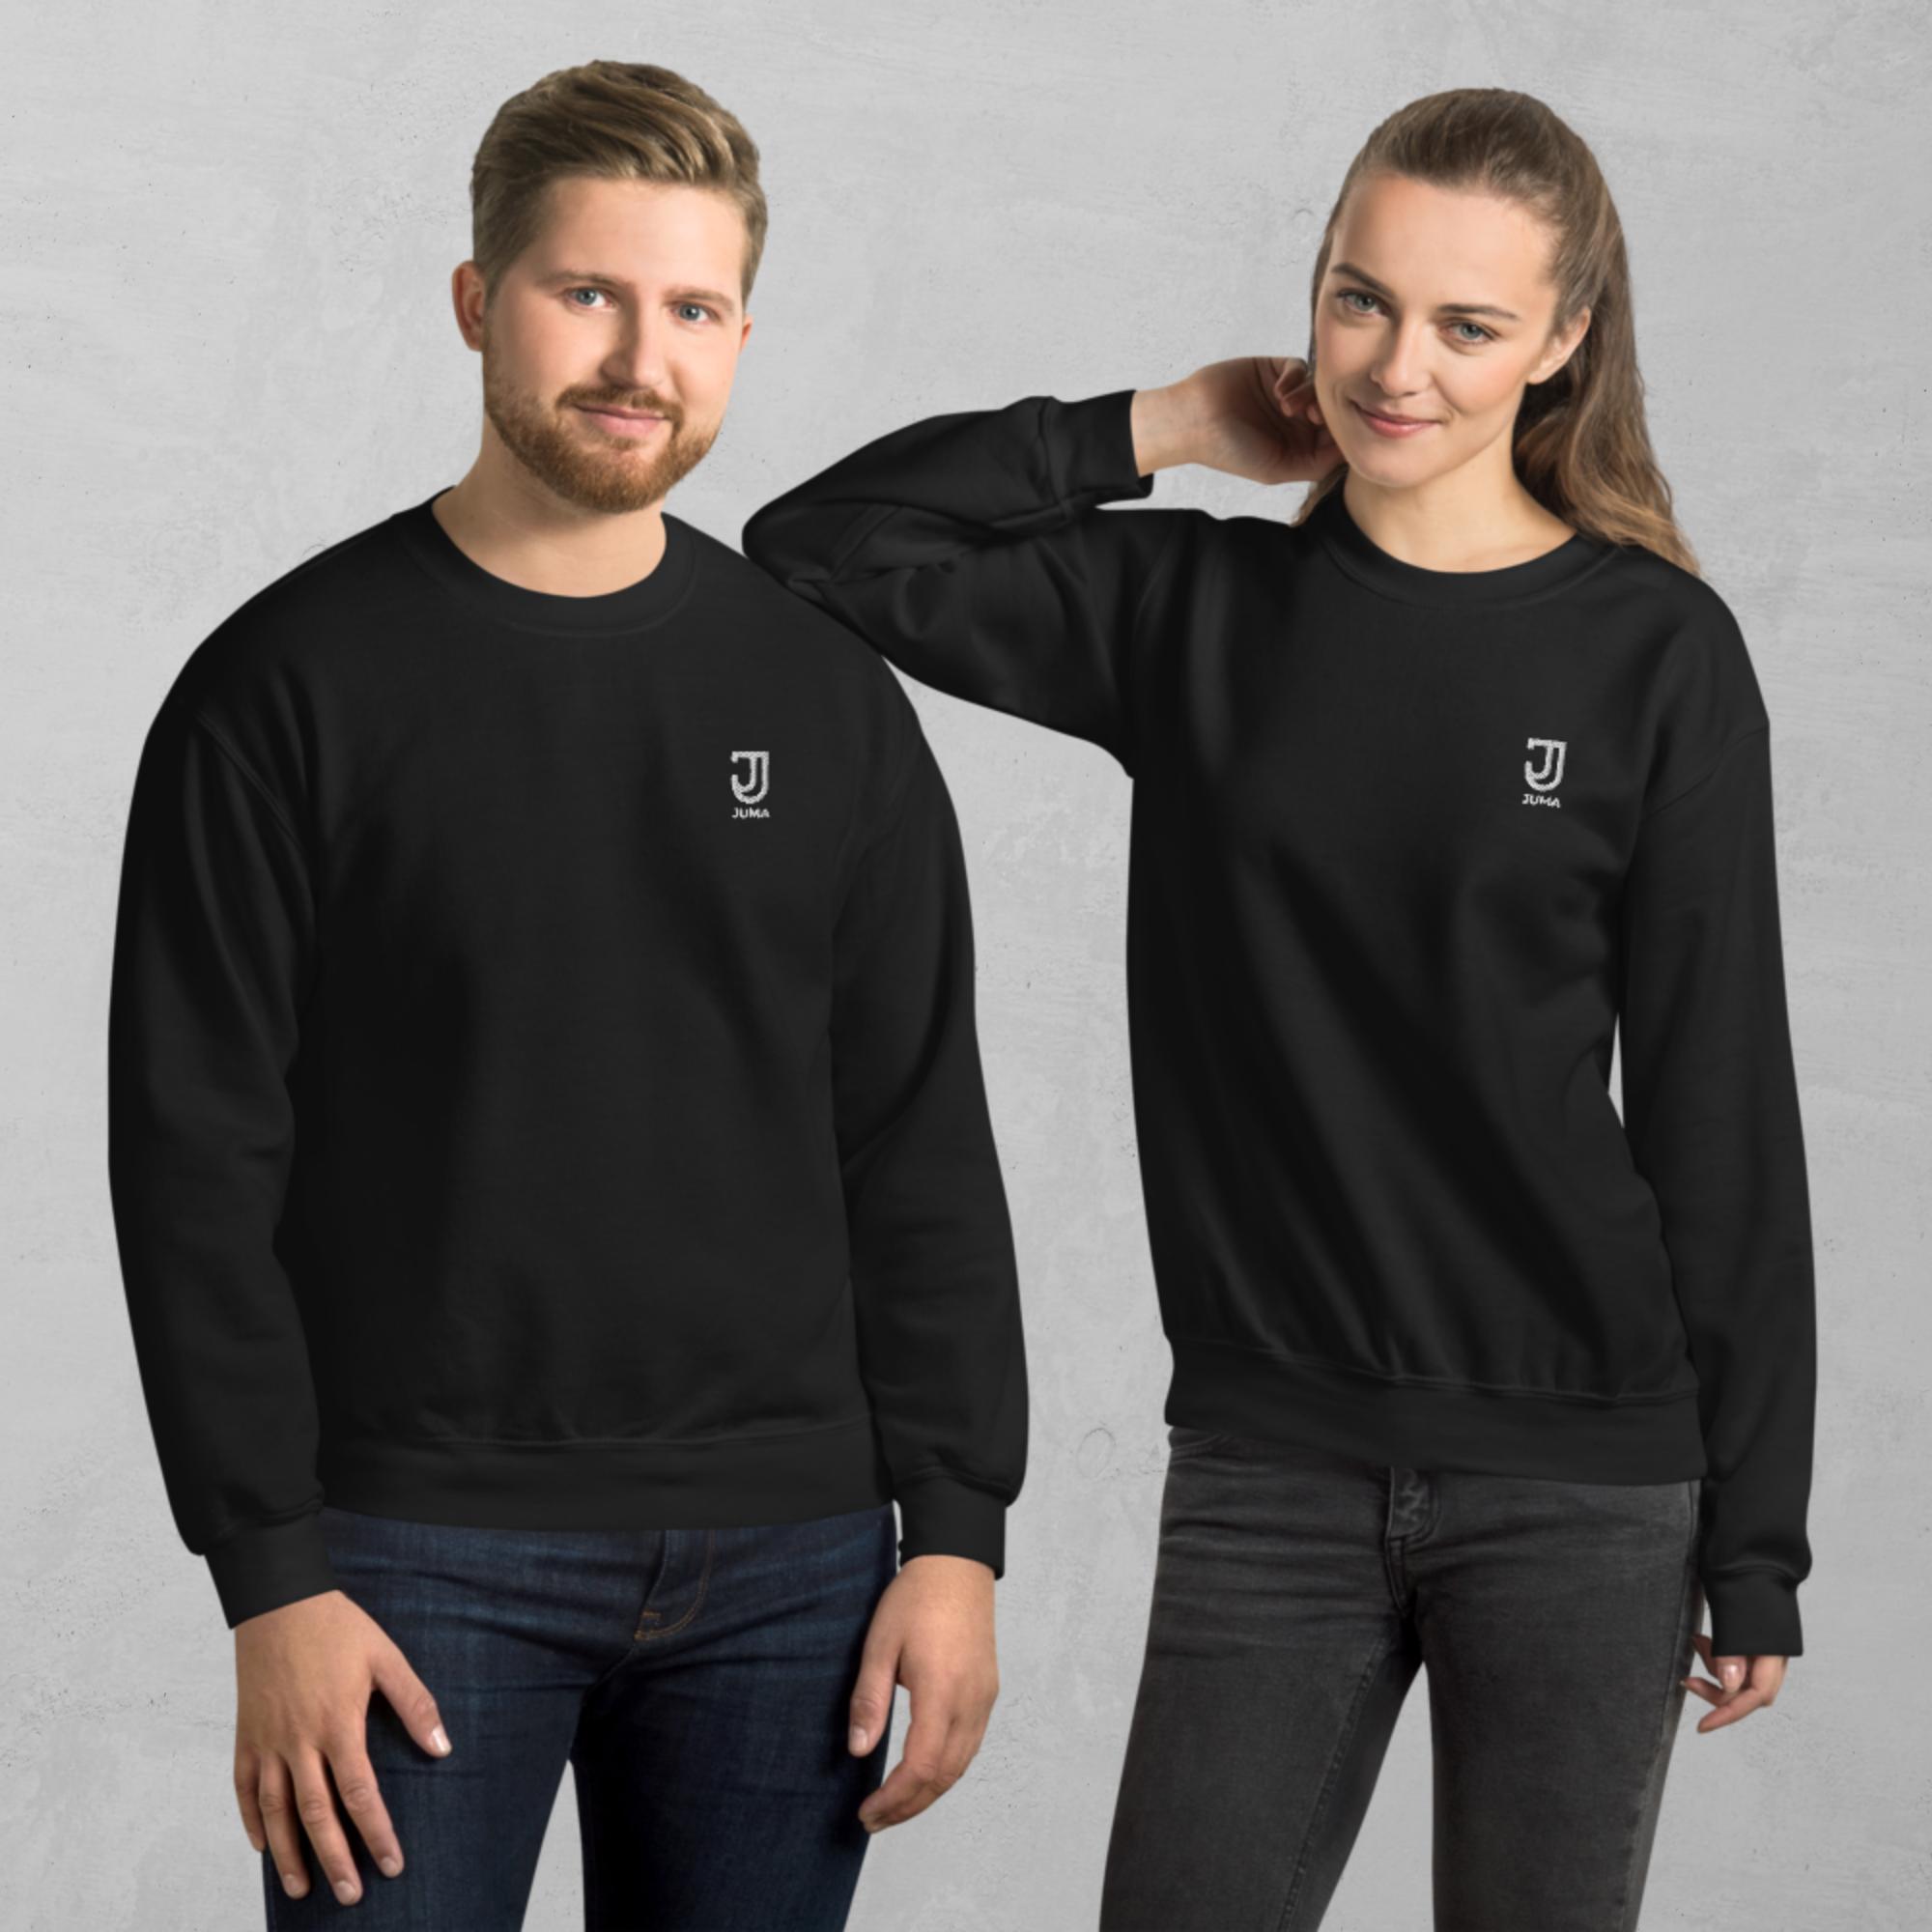 unisex-crew-neck-sweatshirt-black-front-63884a4974d23.jpg